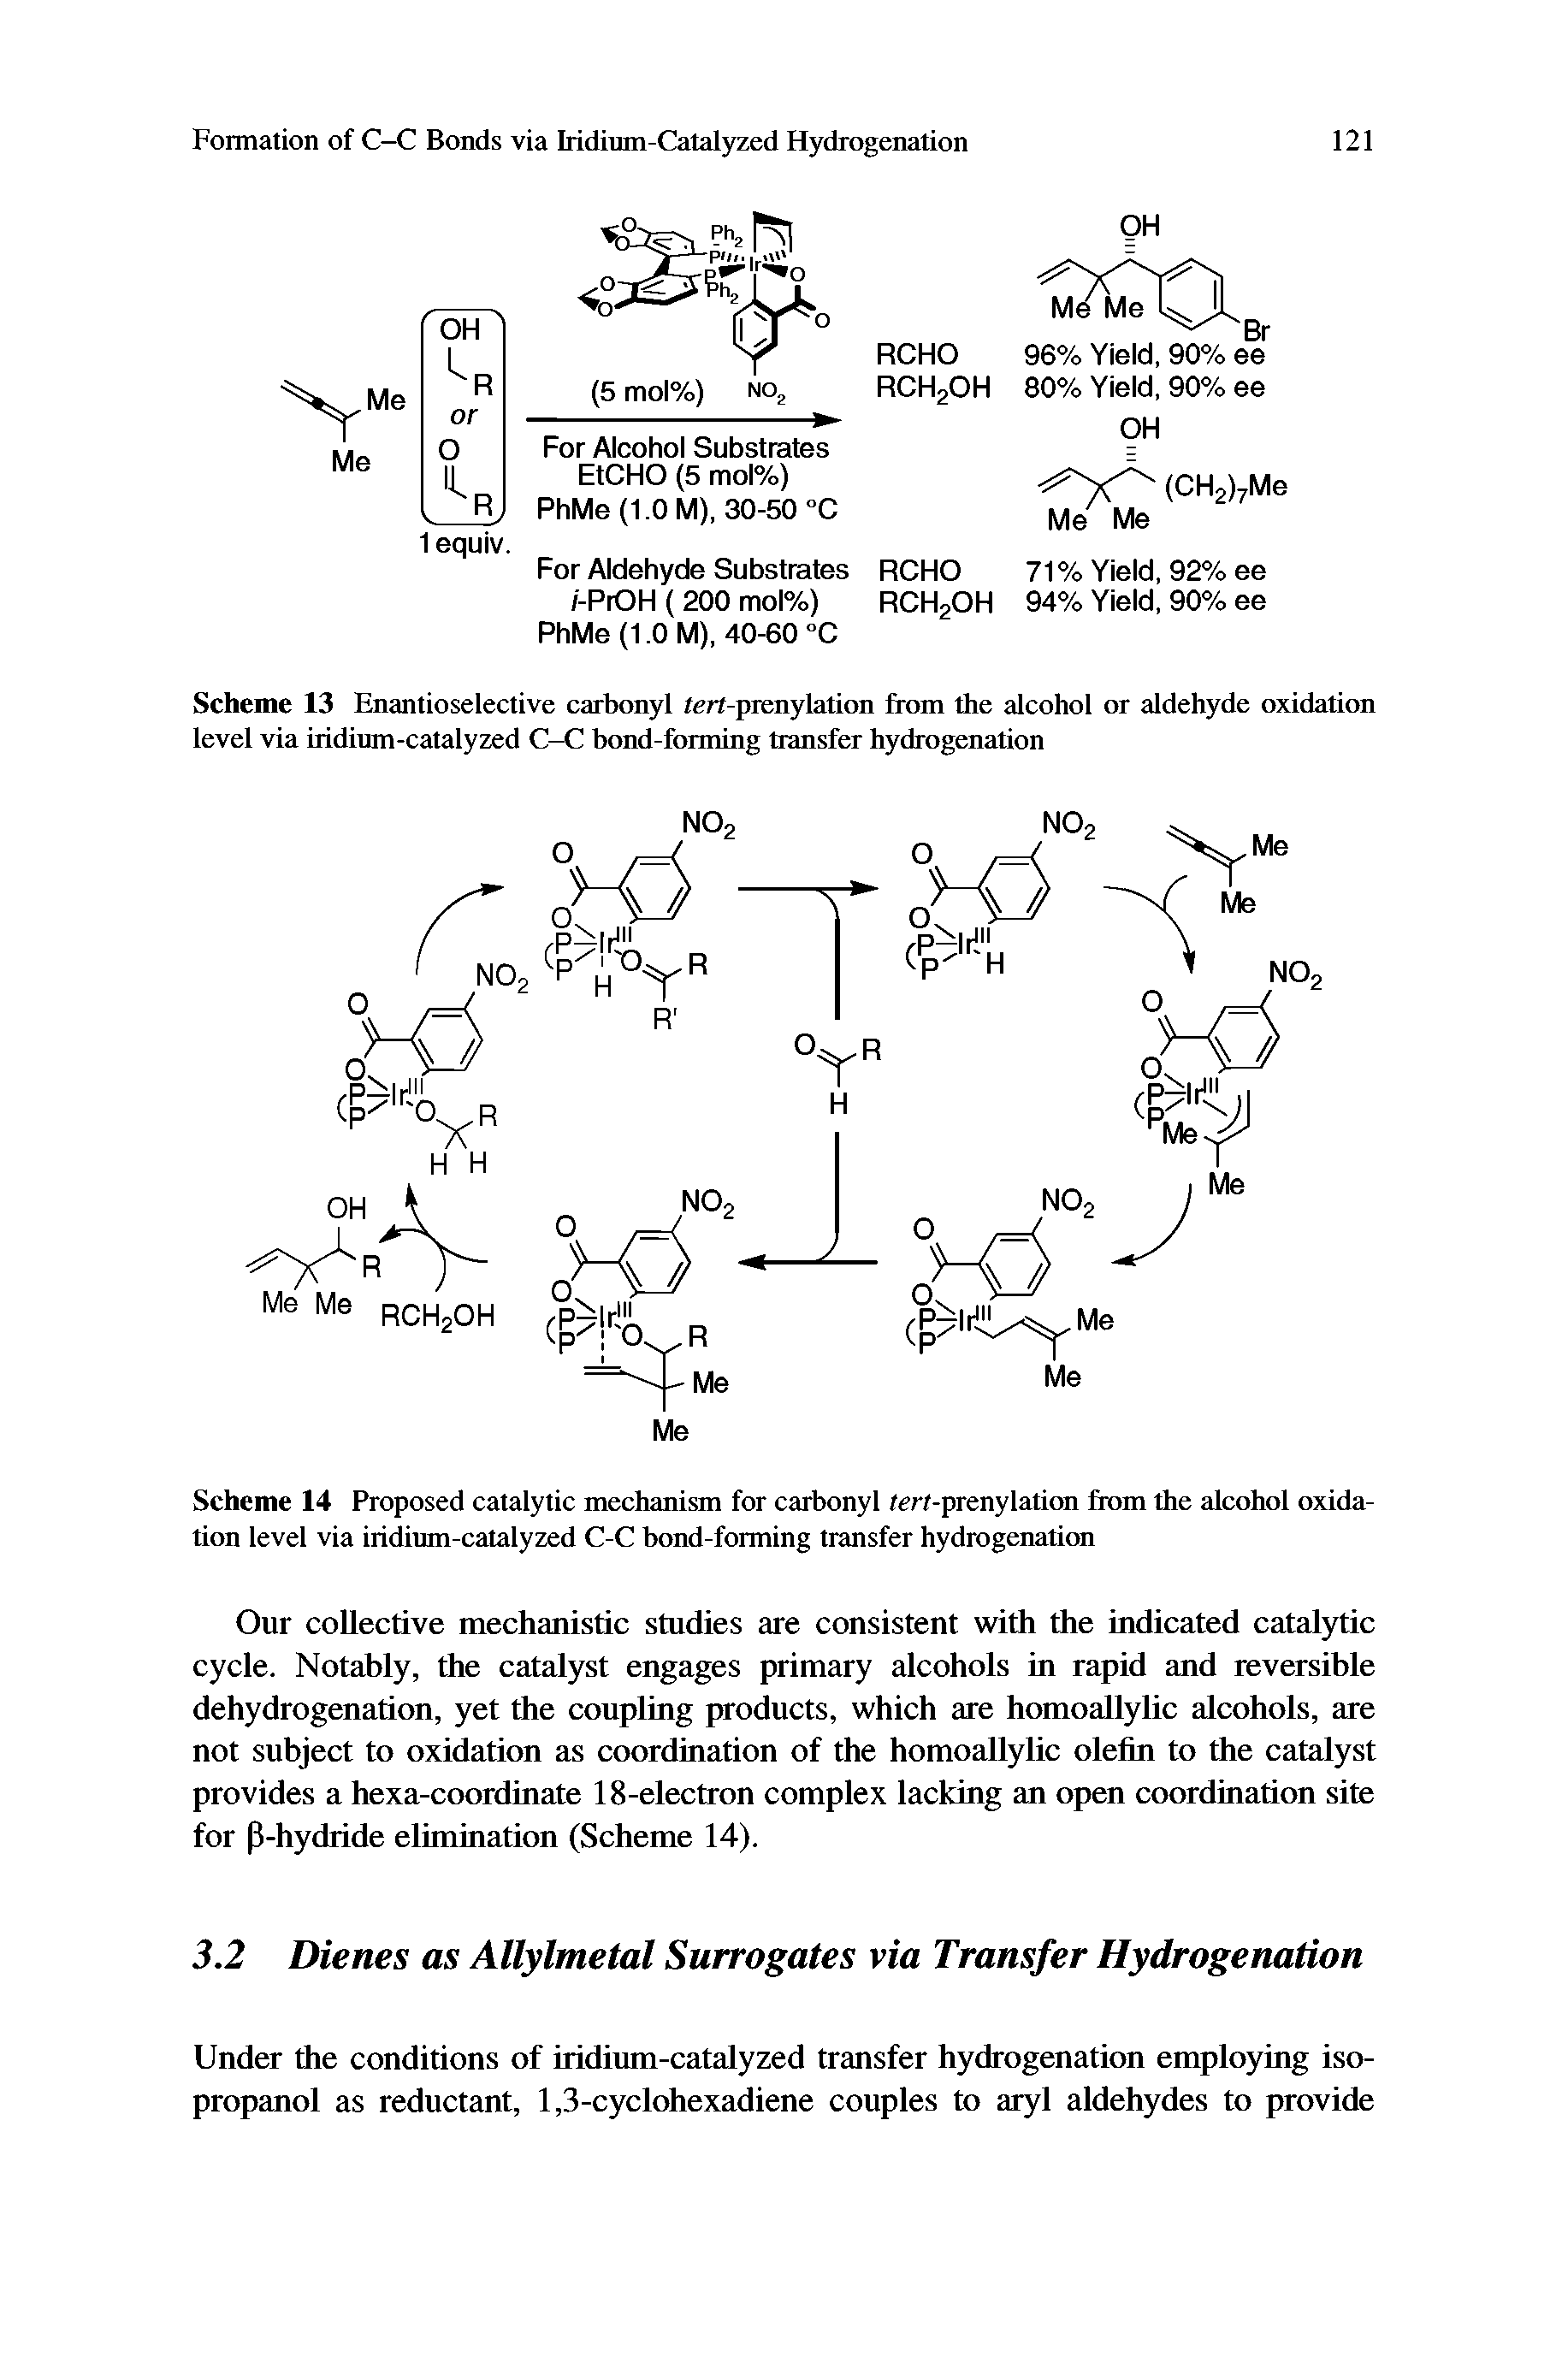 Scheme 14 Proposed catalytic mechanism for carbonyl tert-prenylation from the alcohol oxidation level via iridium-catalyzed C-C bond-forming transfer hydrogenation...